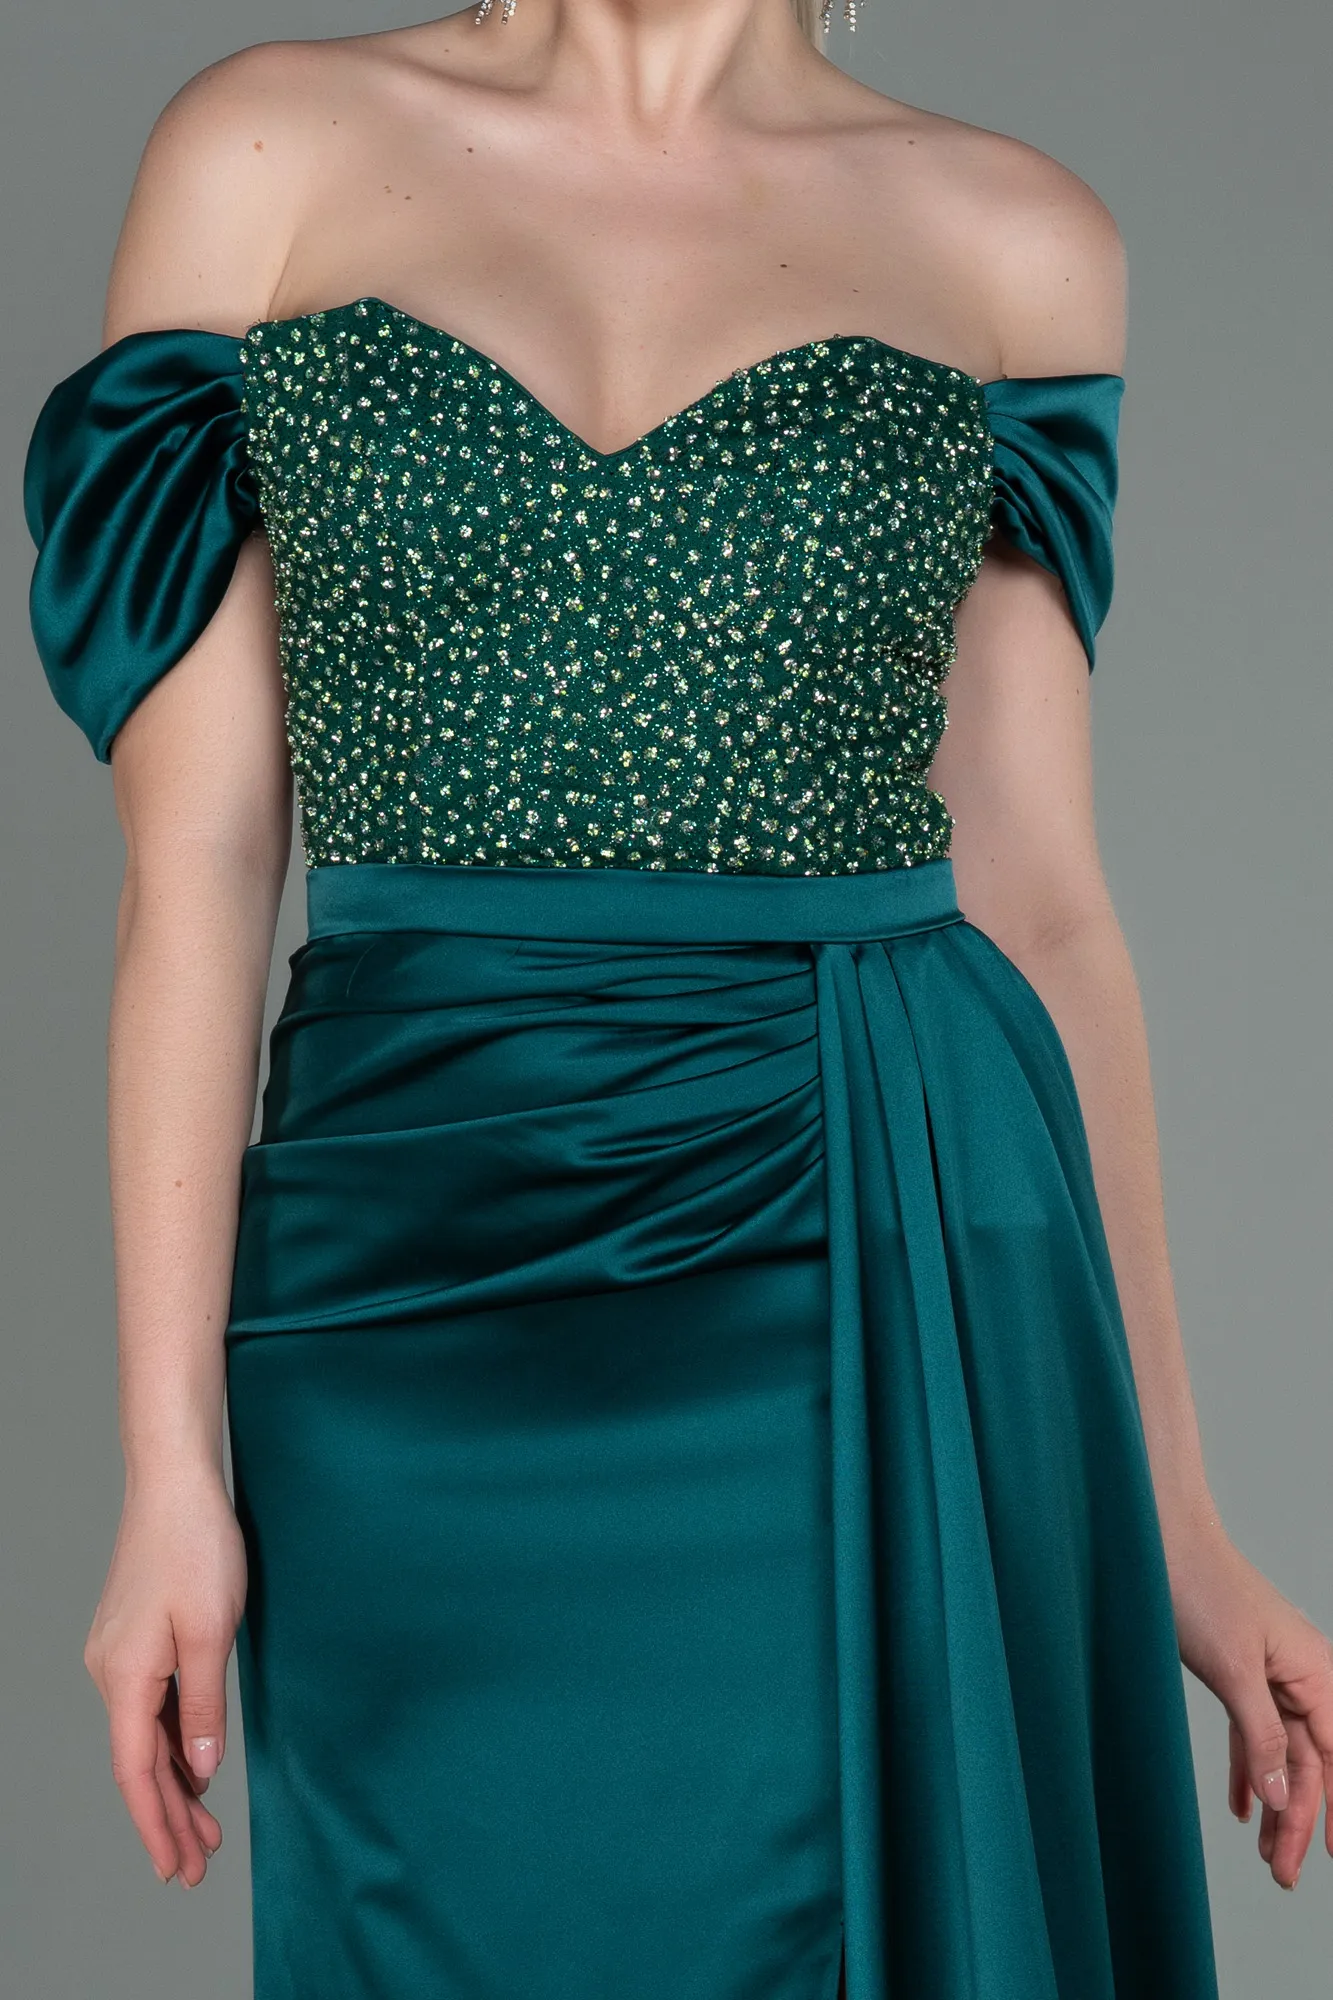 Emerald Green-Long Satin Evening Dress ABU3187